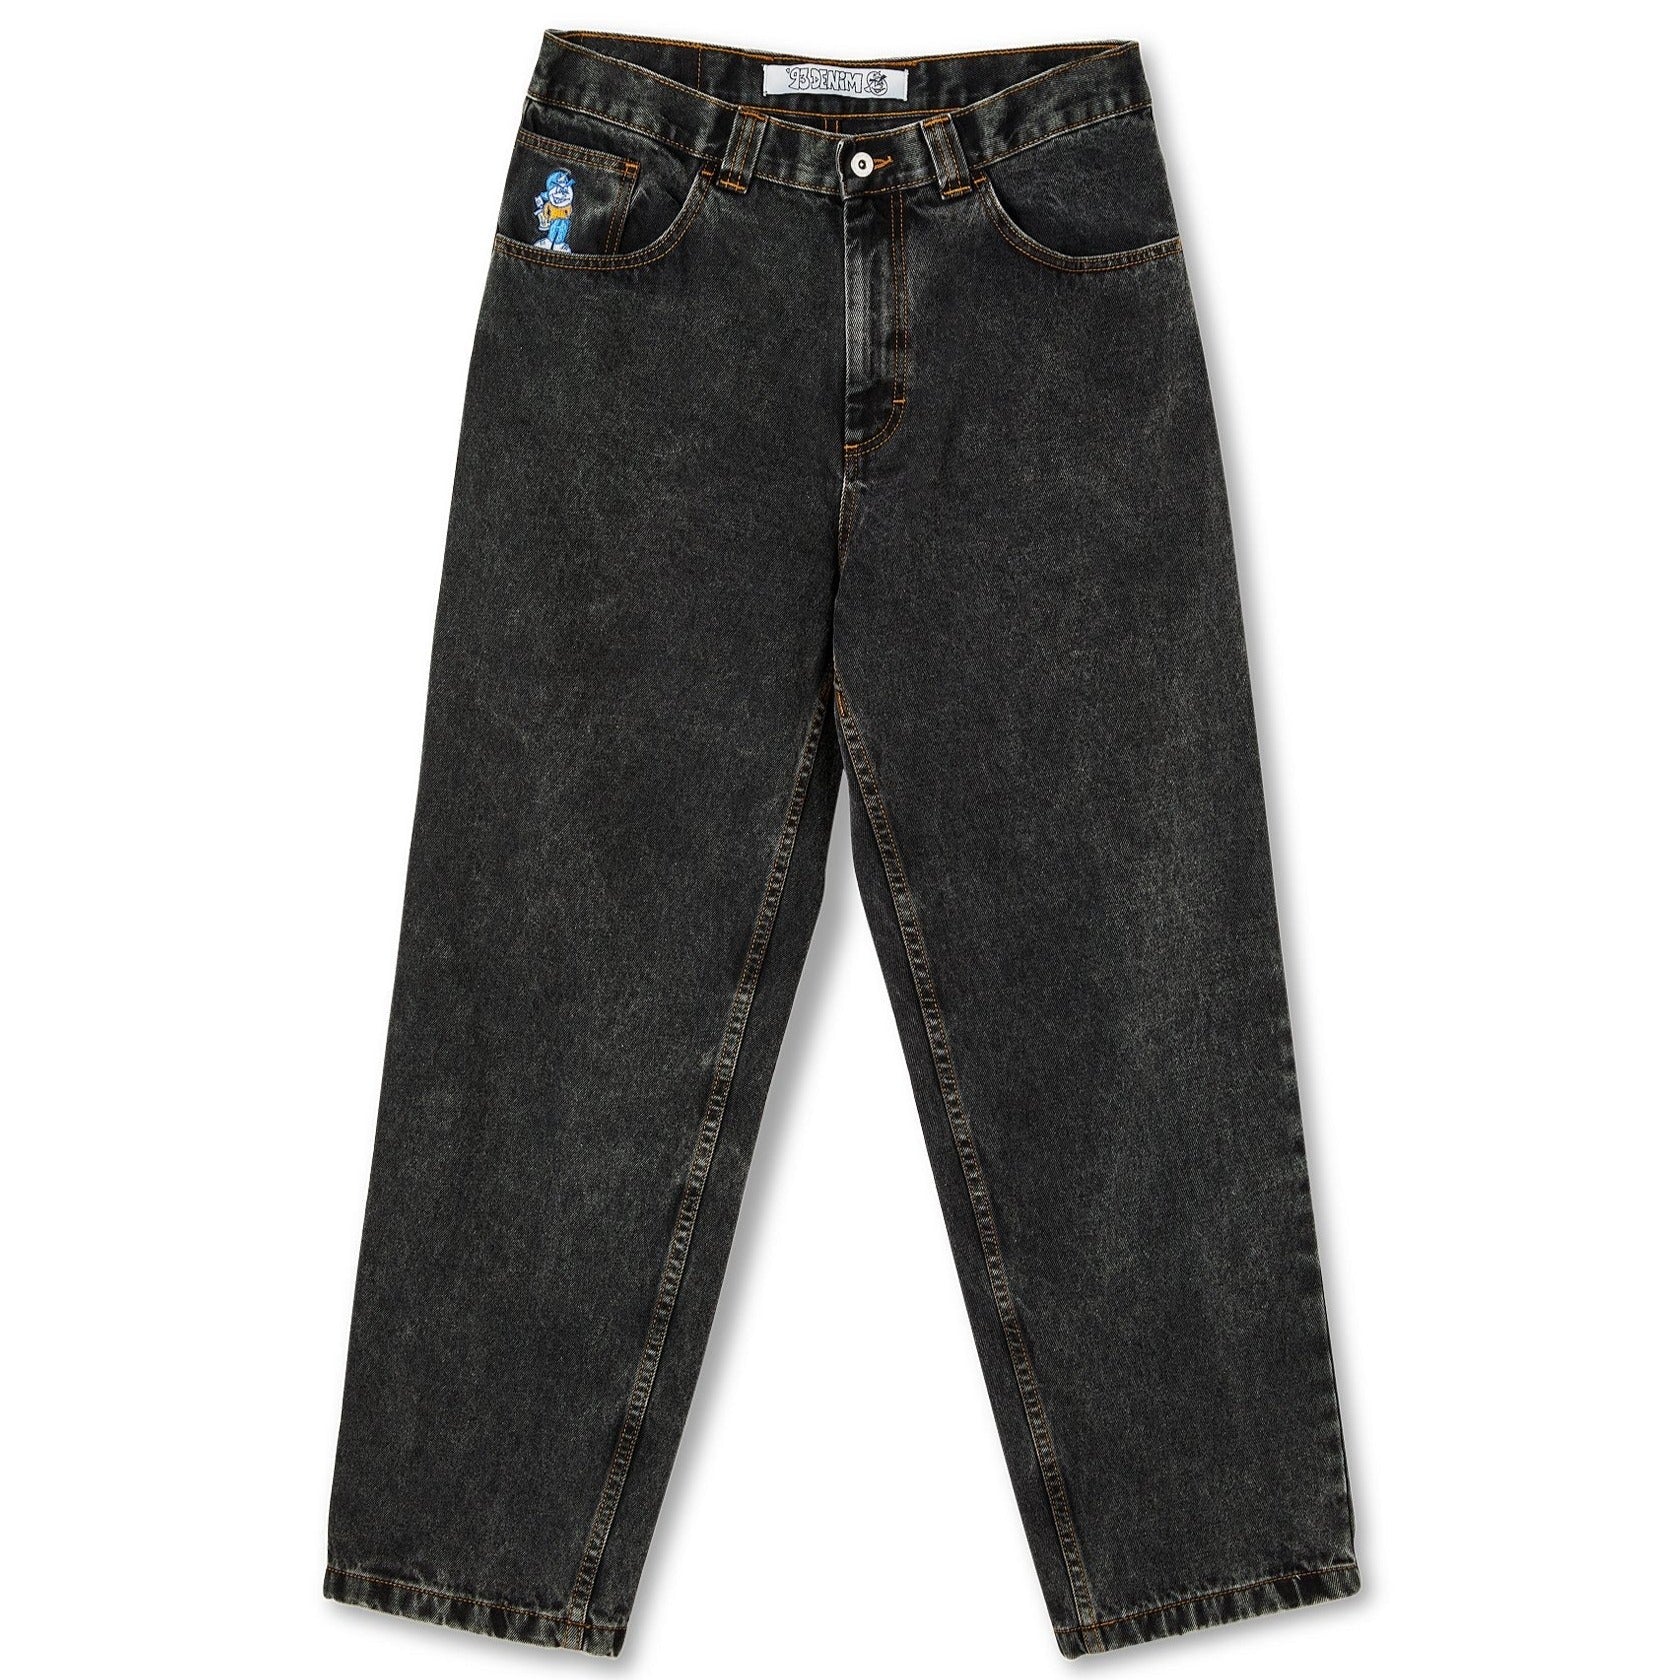 Polar Skate Co. 90's jeans デニム 34×32 - パンツ